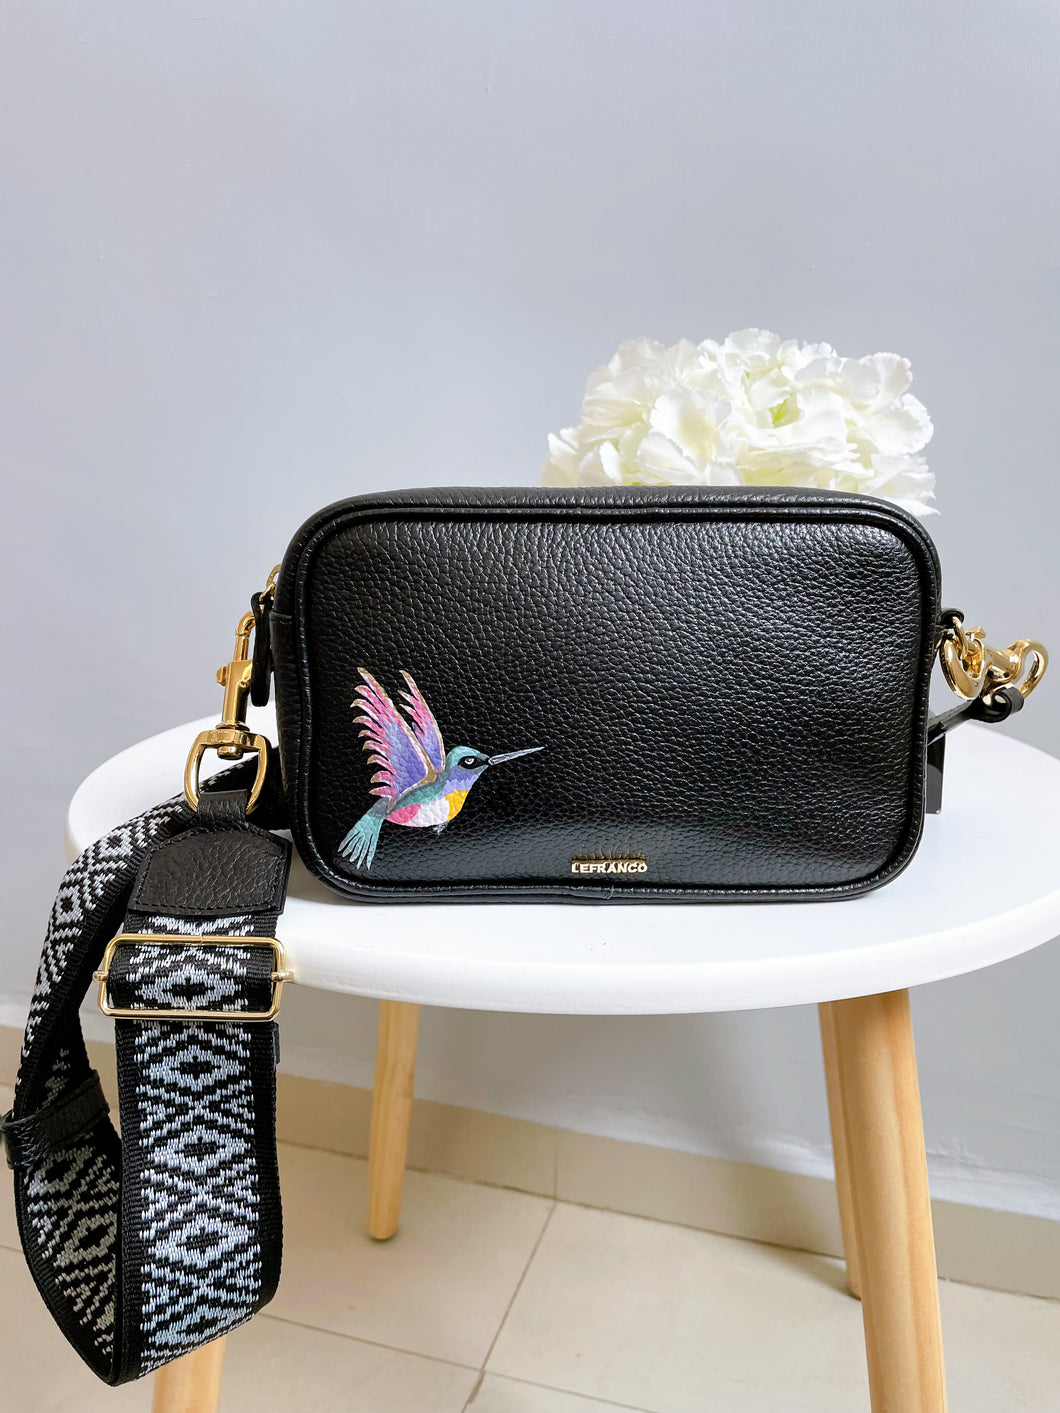 Moonrise Bag negra diseño colibrí